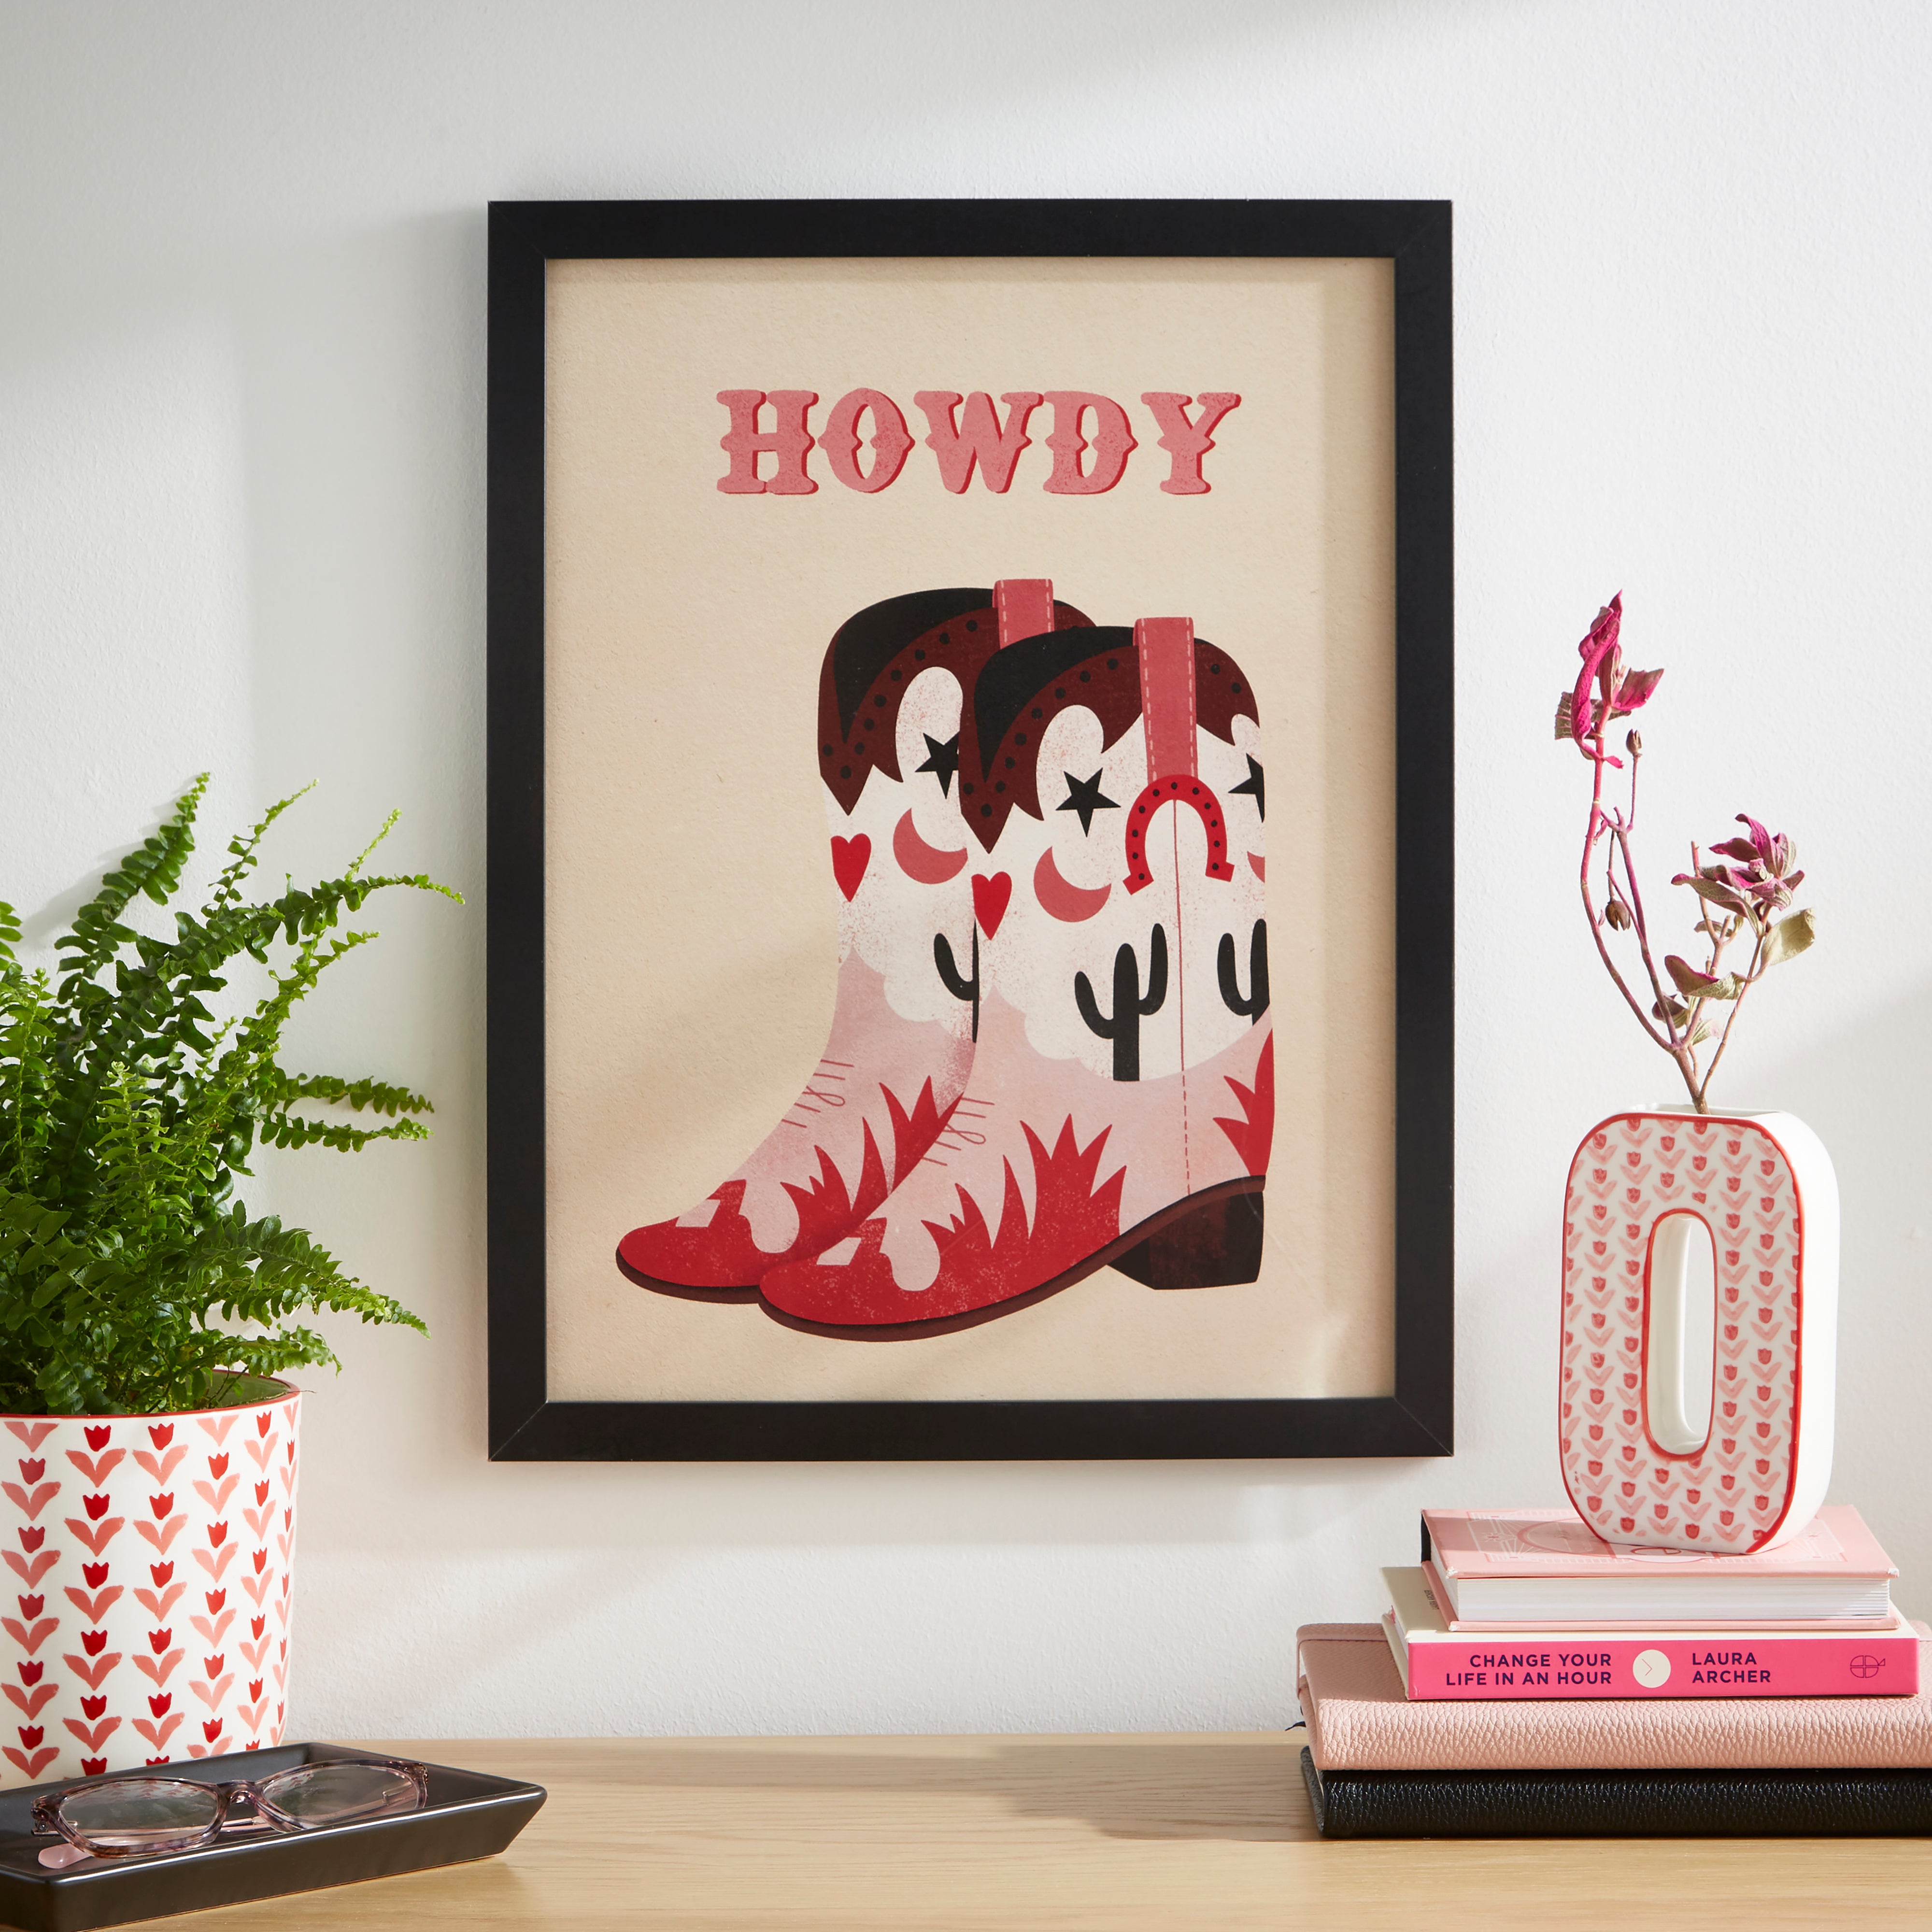 Howdy by Tanya Garcia Framed Print